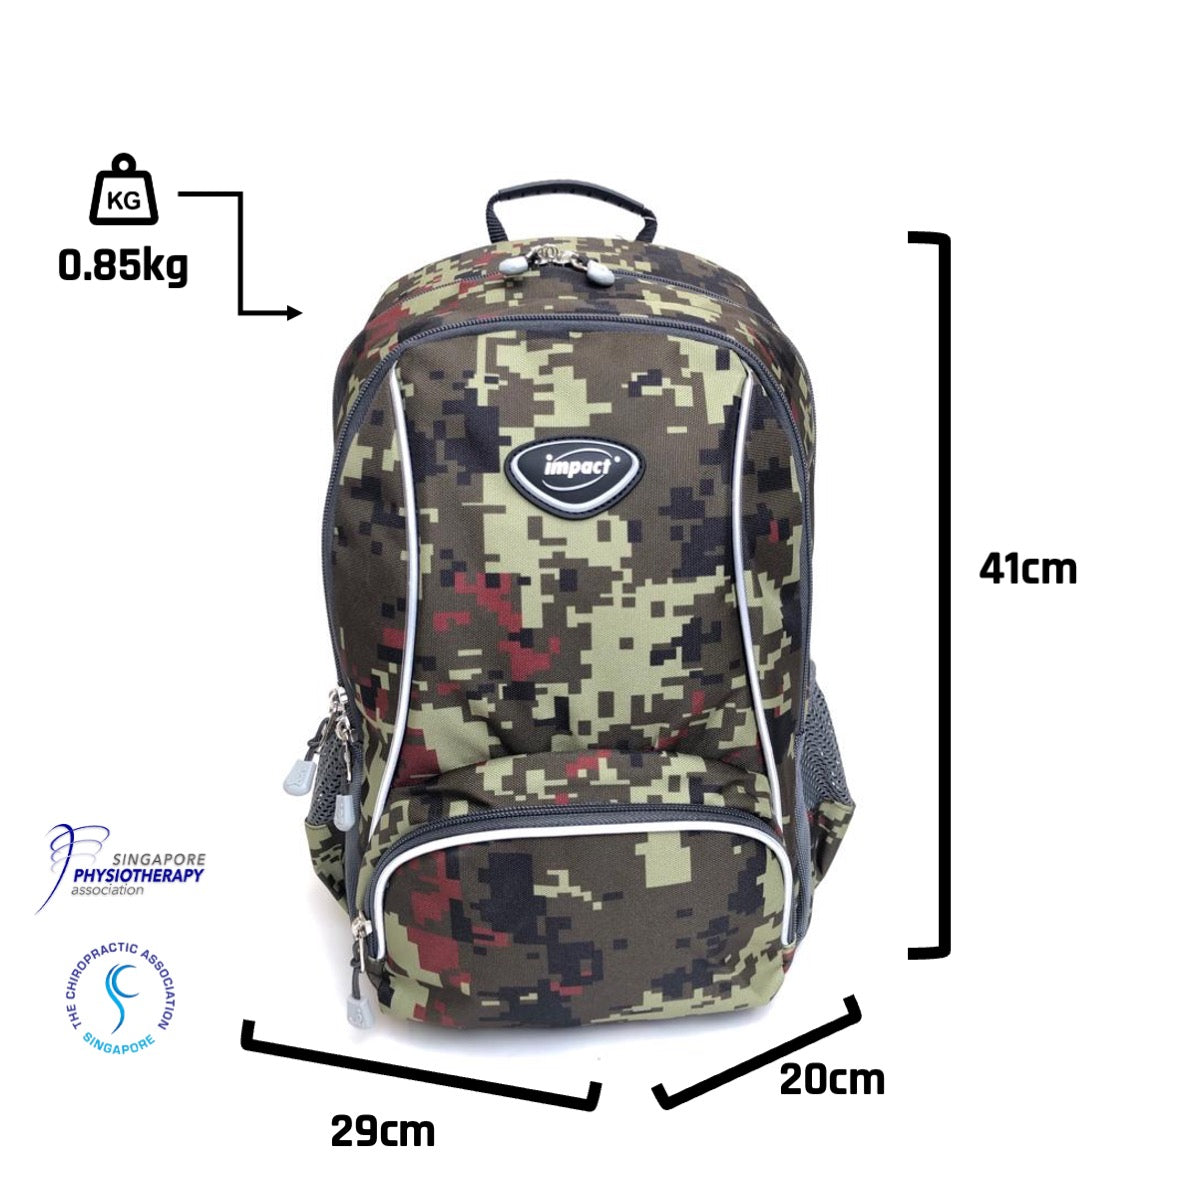 IMPACT - IPEG-165 Ergo-Comfort Spinal Support Backpack